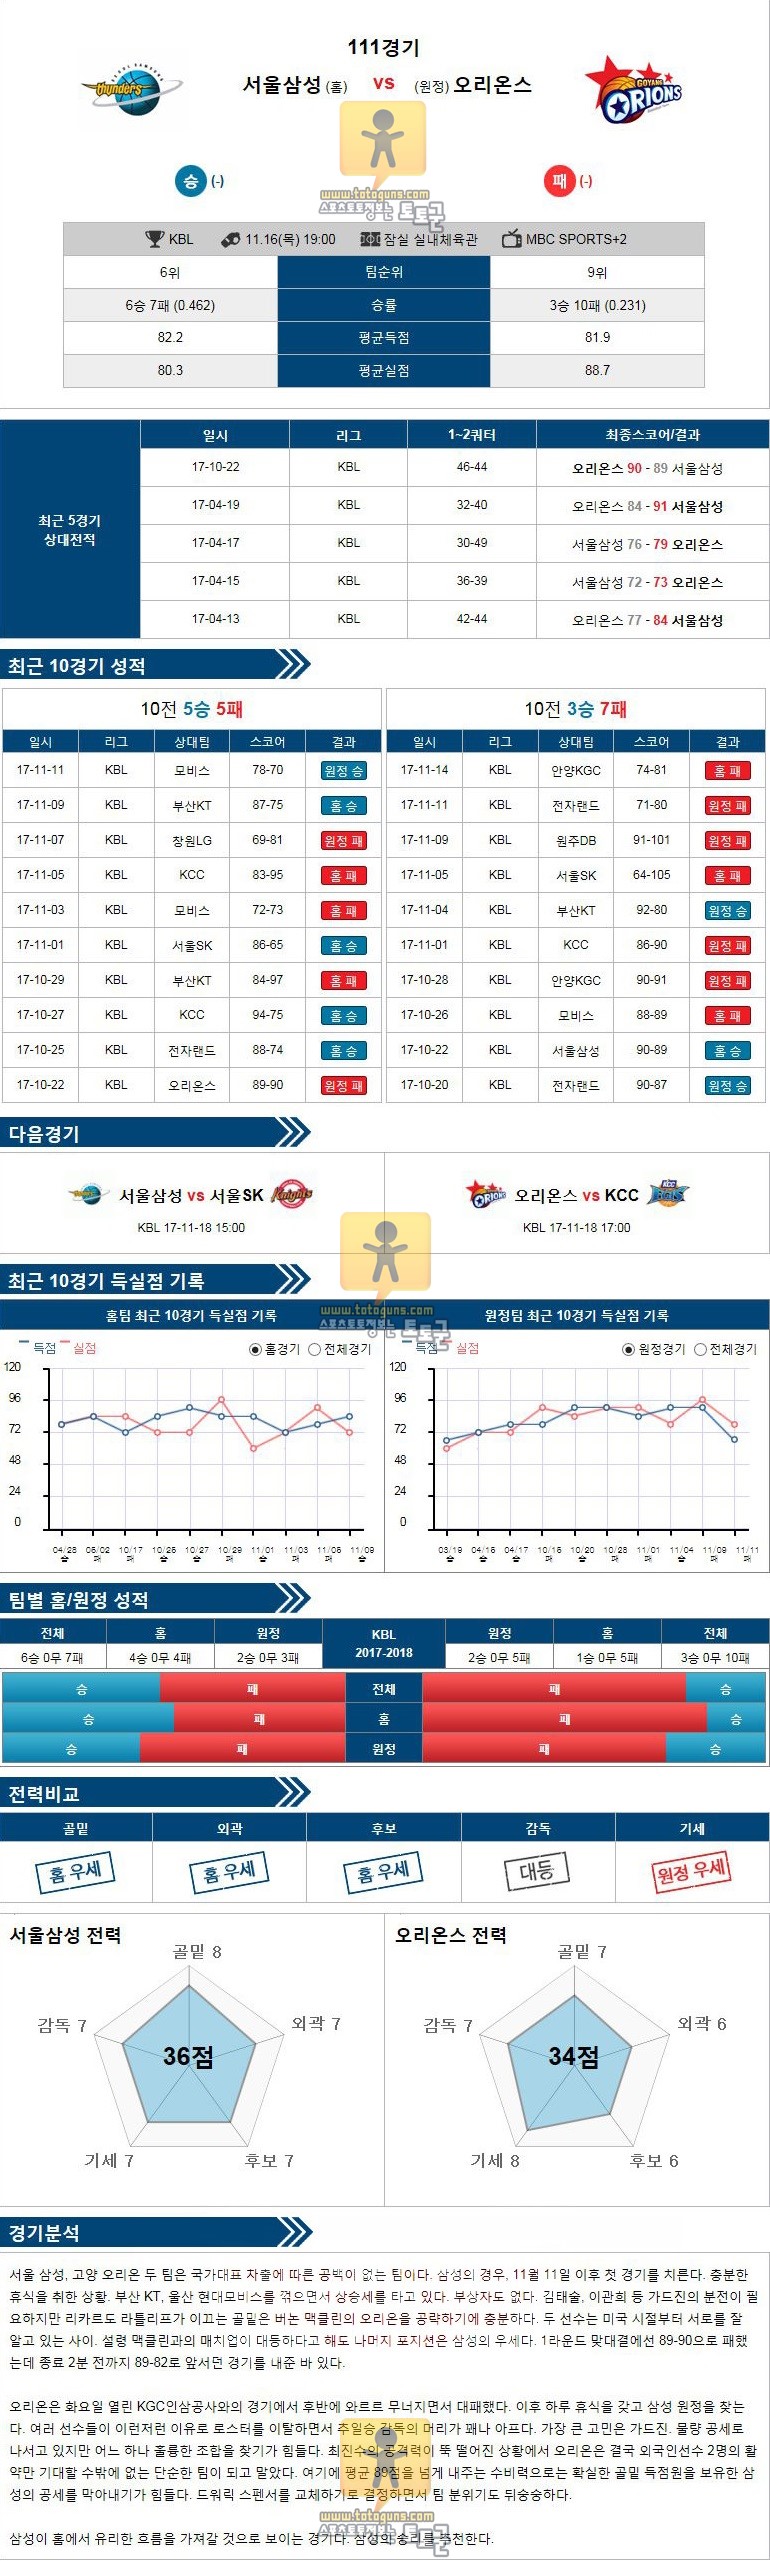 [KBL] 11월 16일 19:00 프로농구분석 서울삼성 vs 고양 오리온스